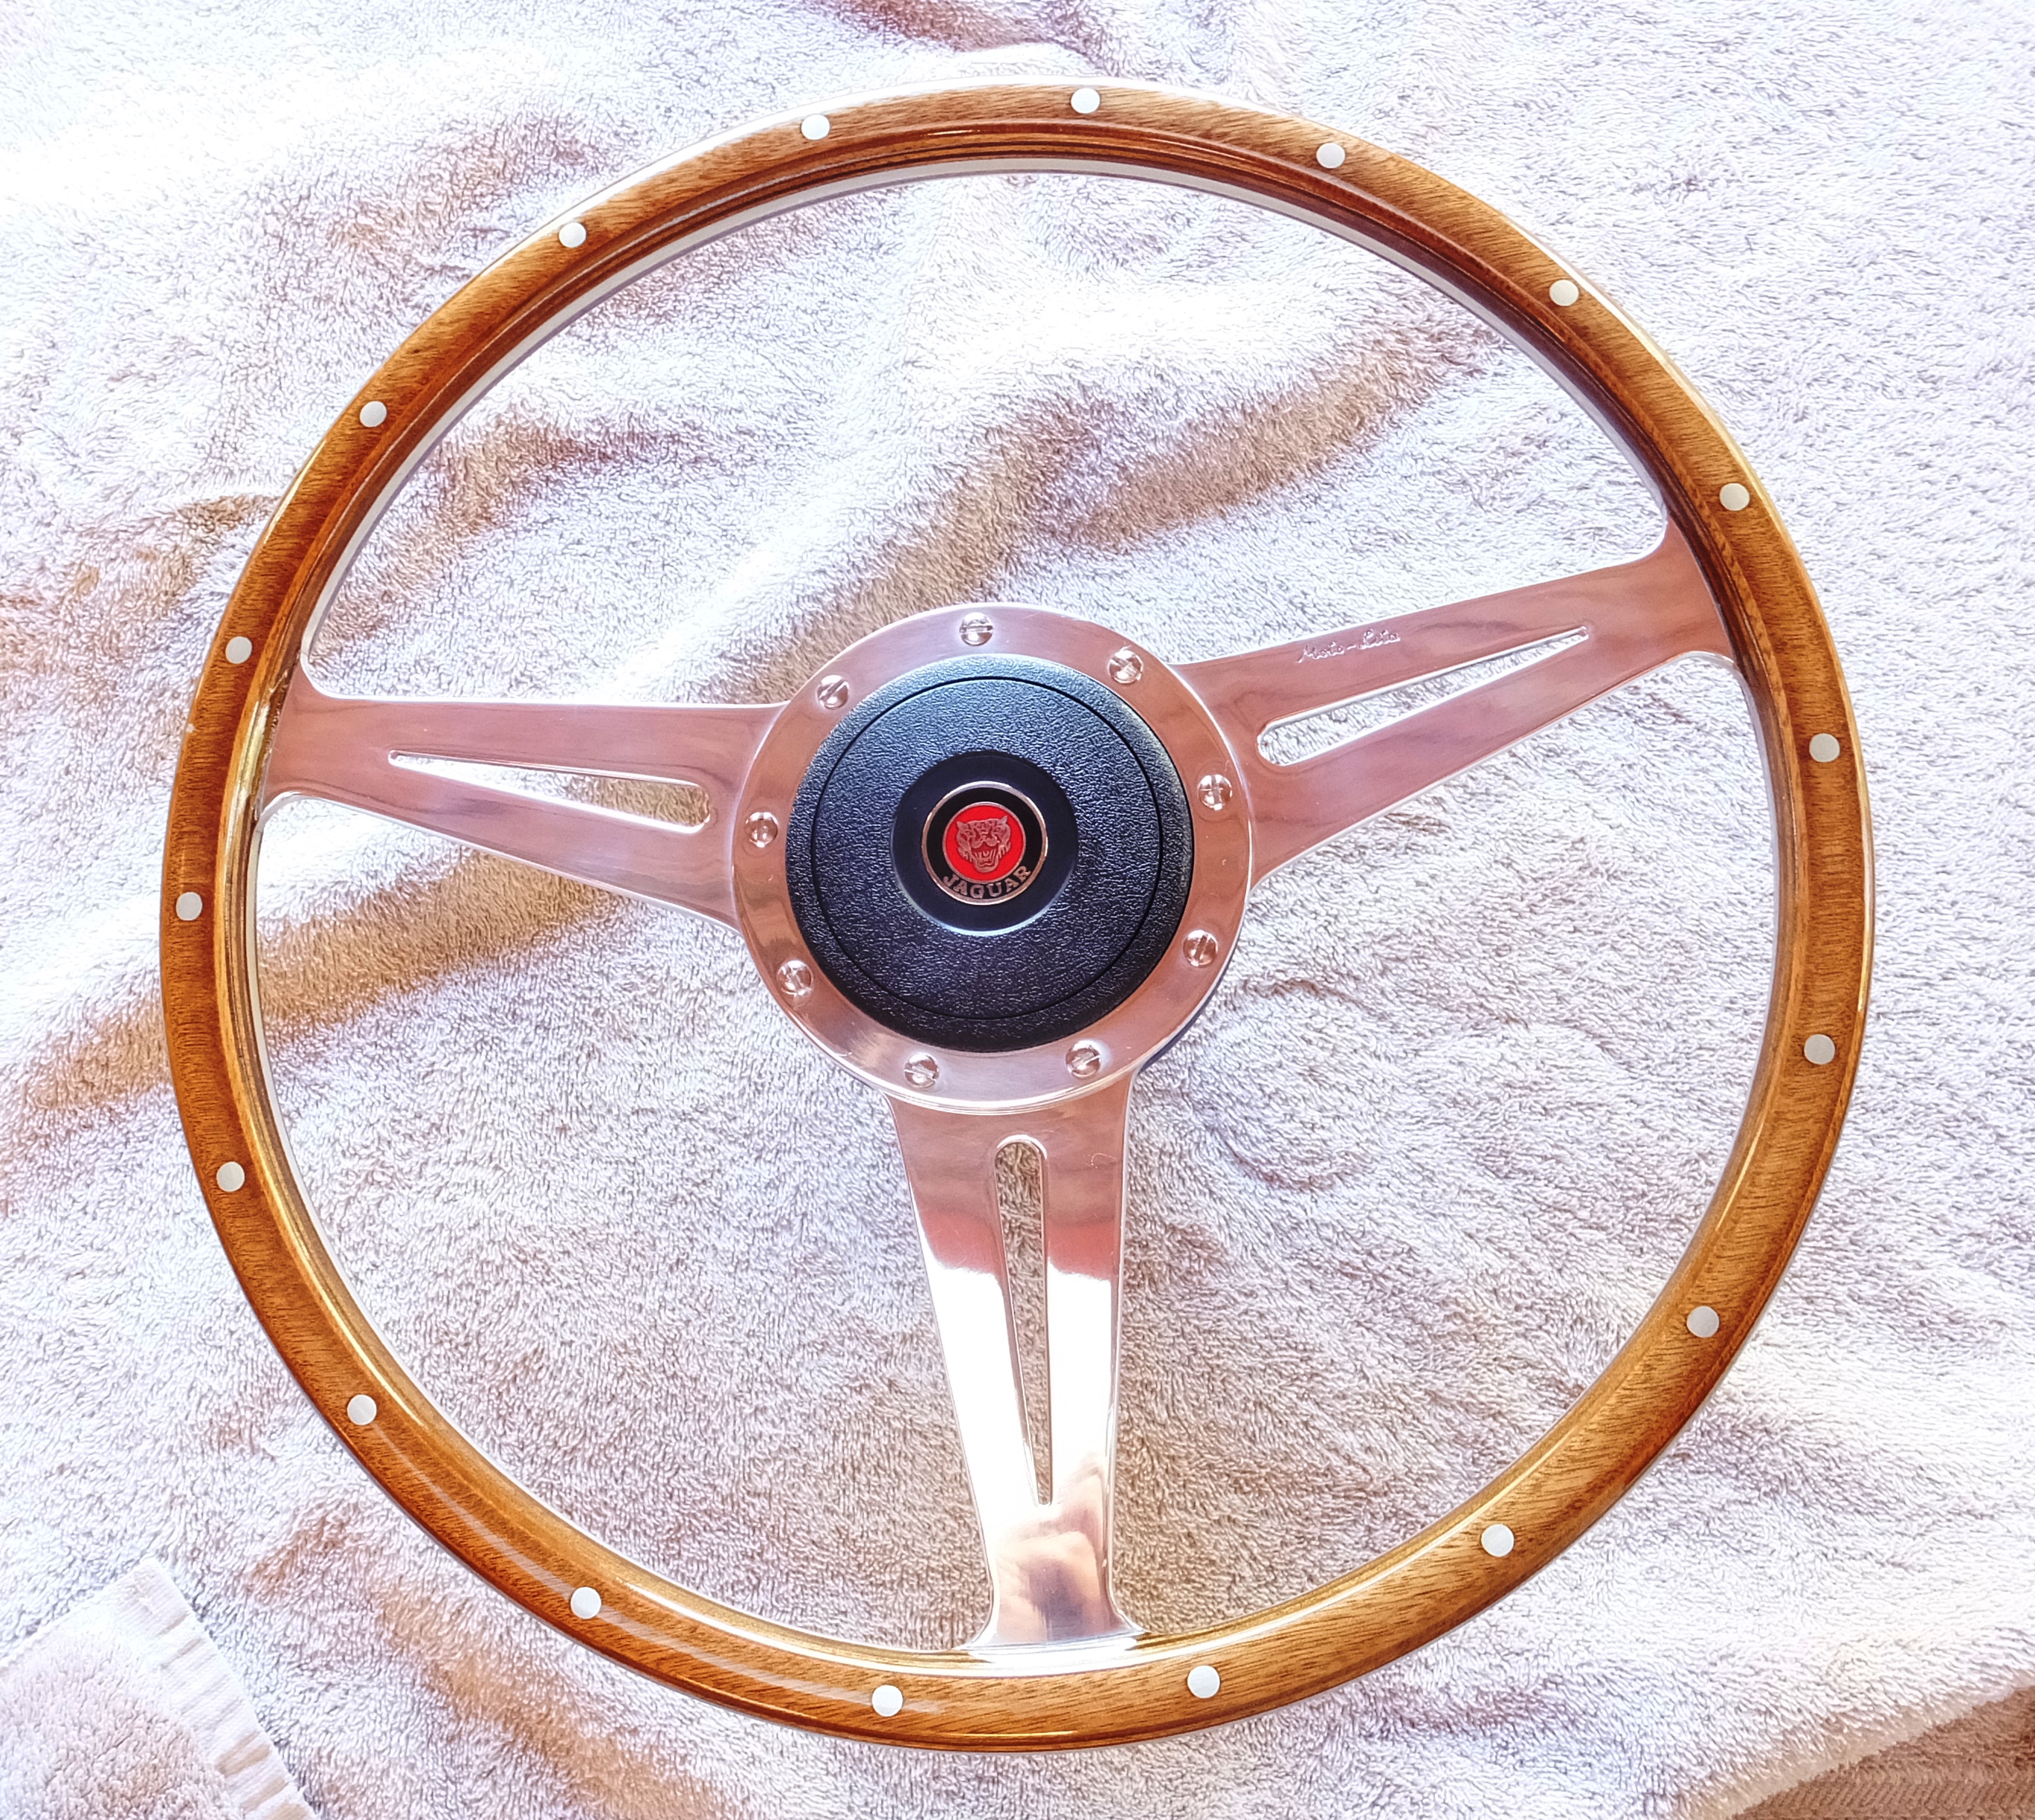 [FS] Motolita Steering wheel, hub, and horn button